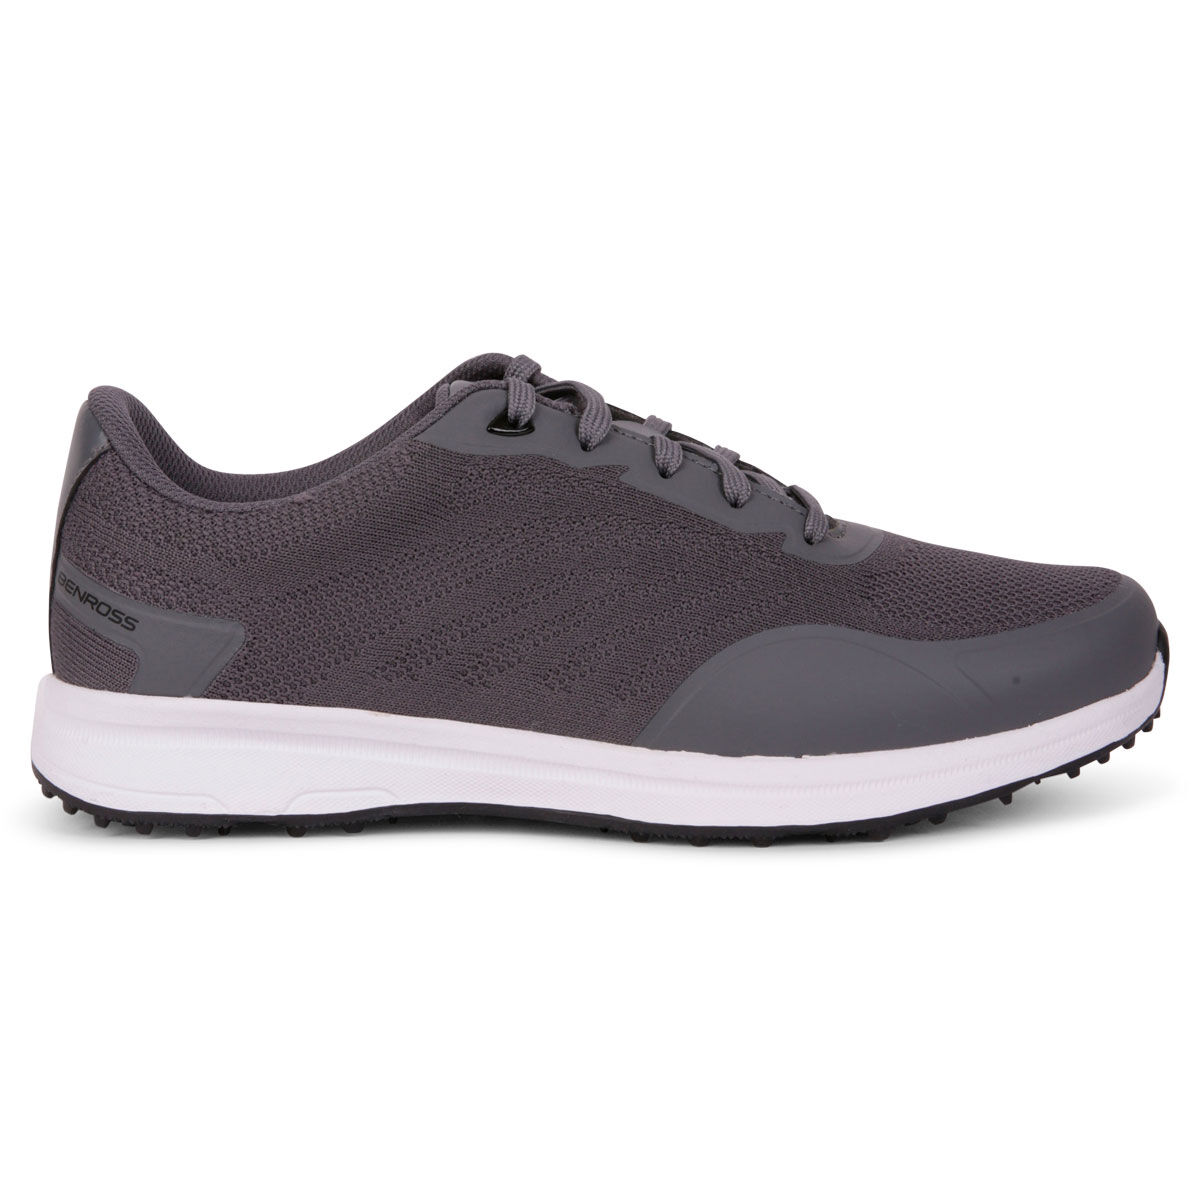 Benross Golf Shoes, Men's Diablo Waterproof Spikeless, Mens, Dark grey, 7 | American Golf von Benross